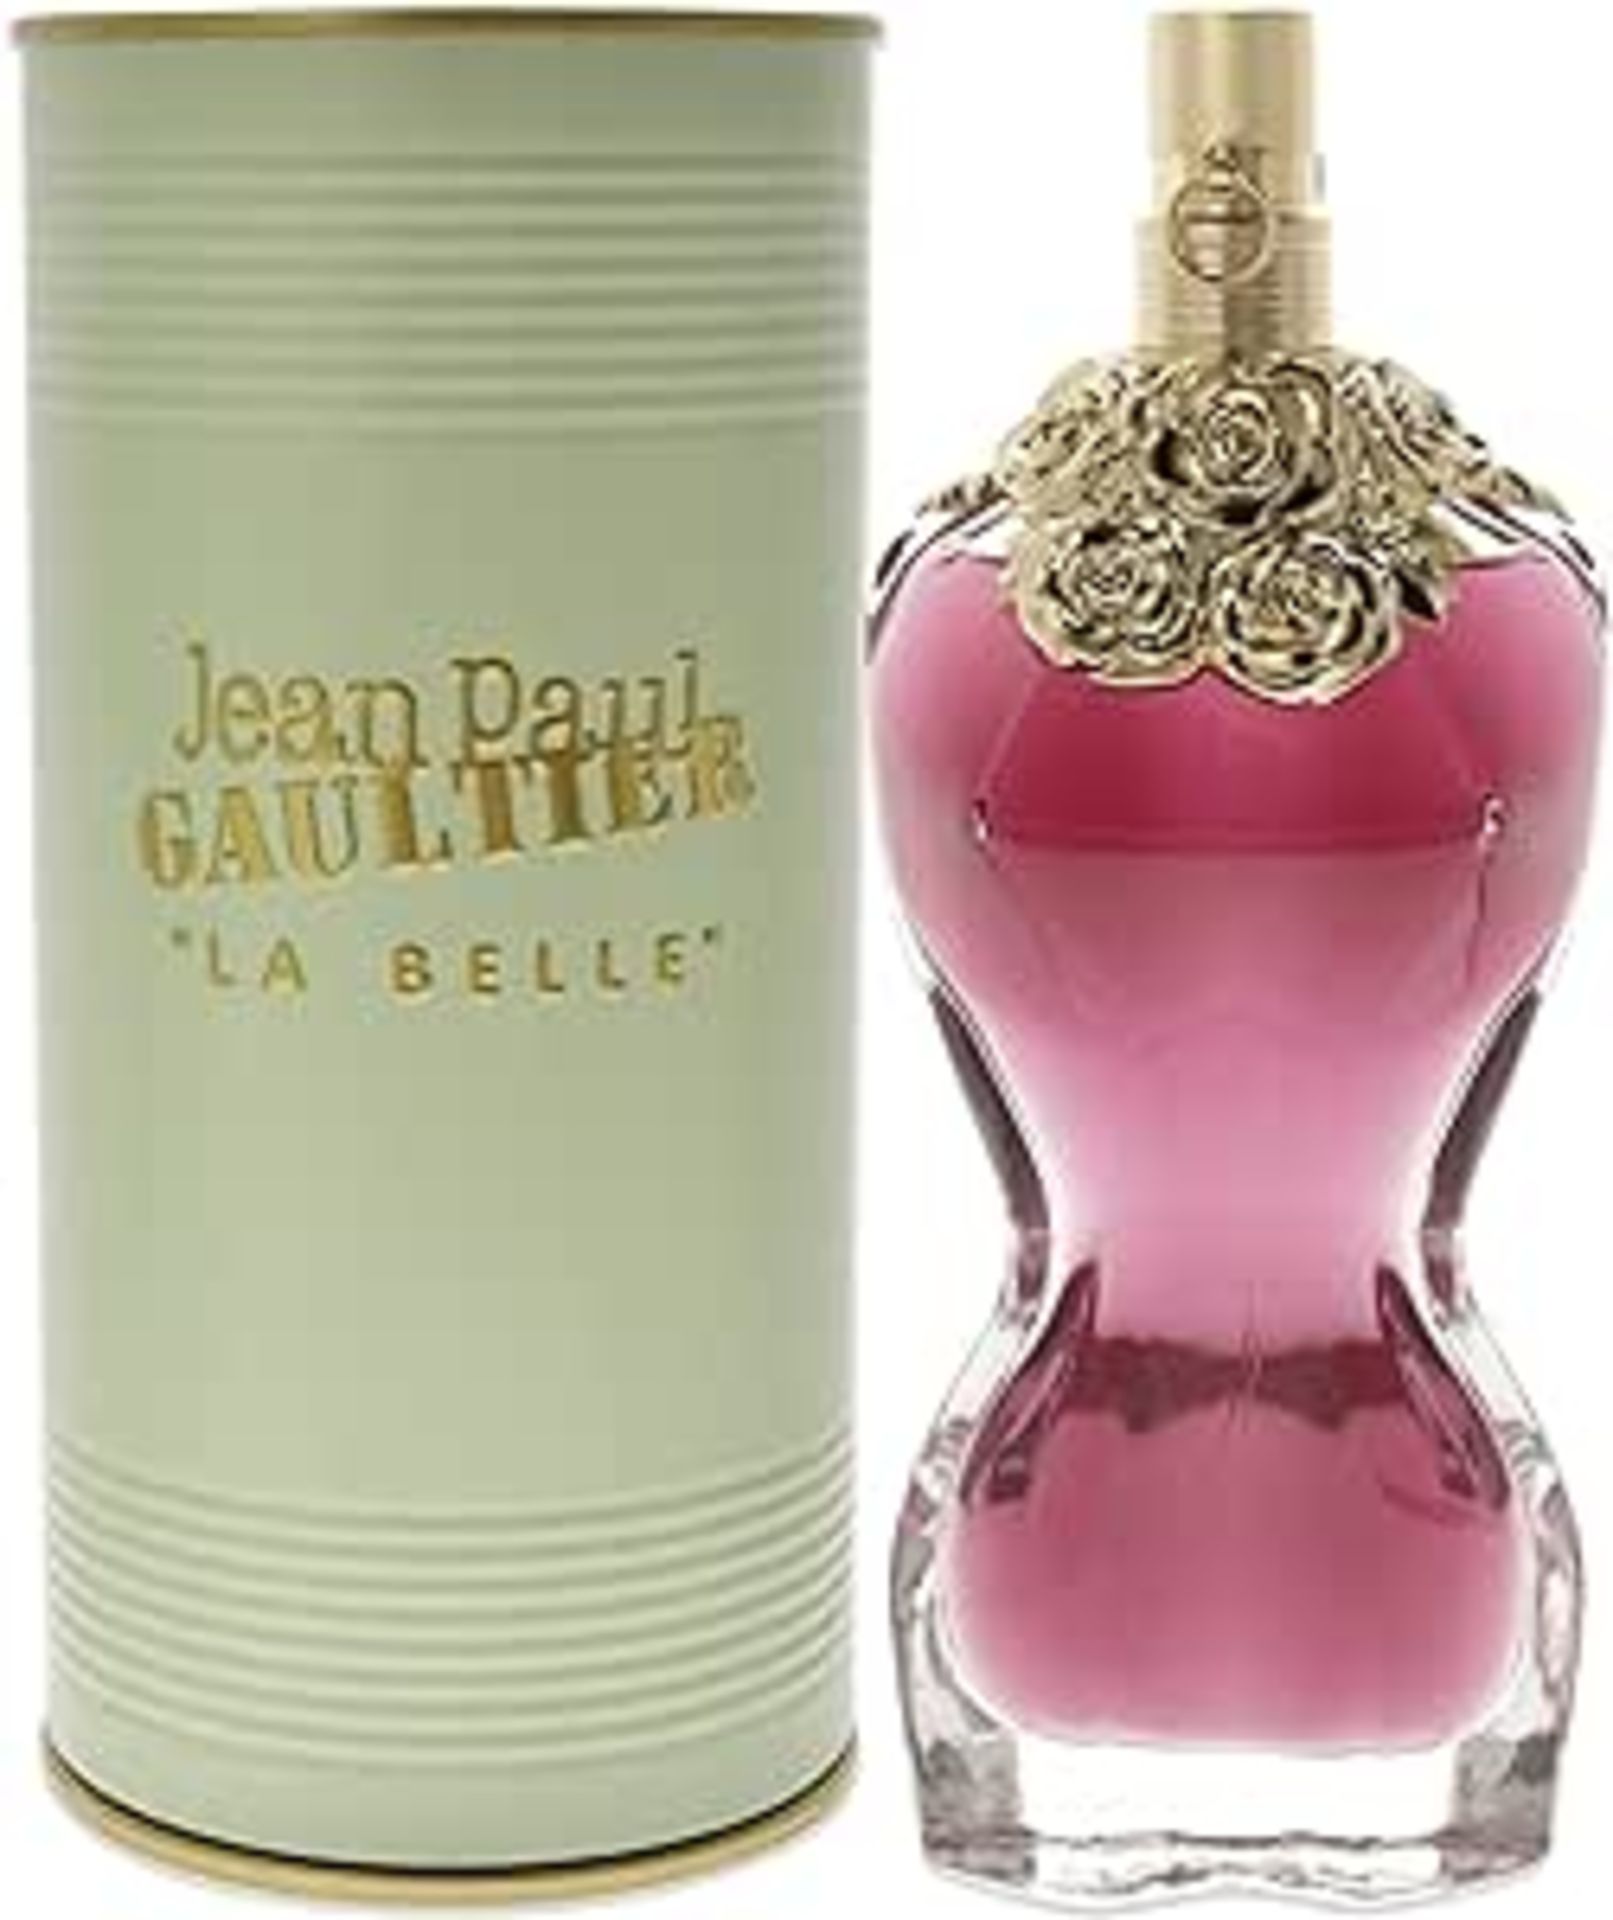 Jean Paul Gaultier La Belle 50ml (Delivery Band A)